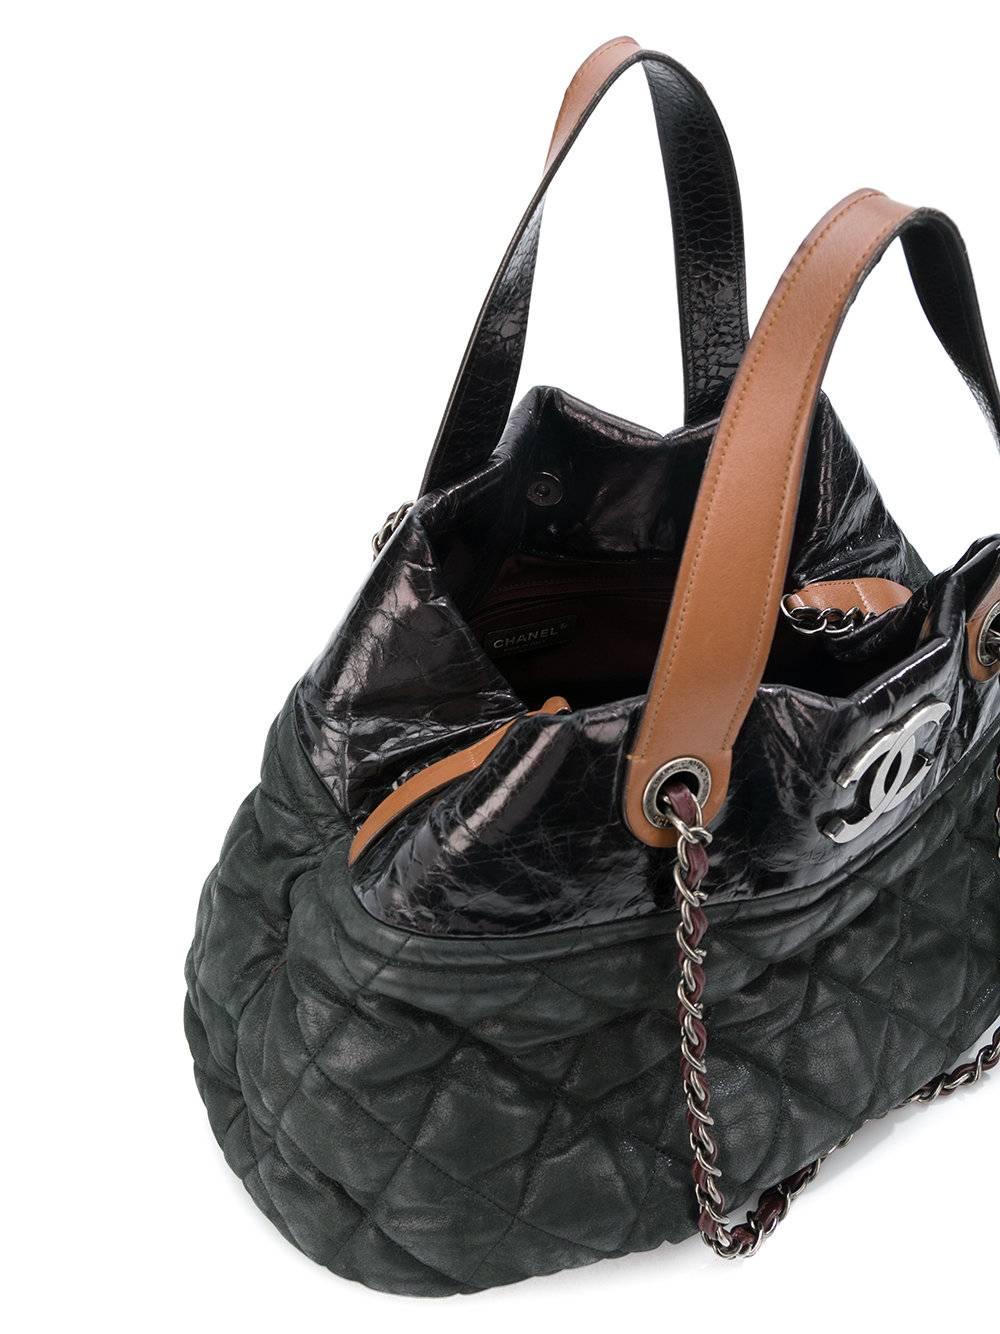 Women's or Men's Chanel Black Coco Cocoon Tote Bag 